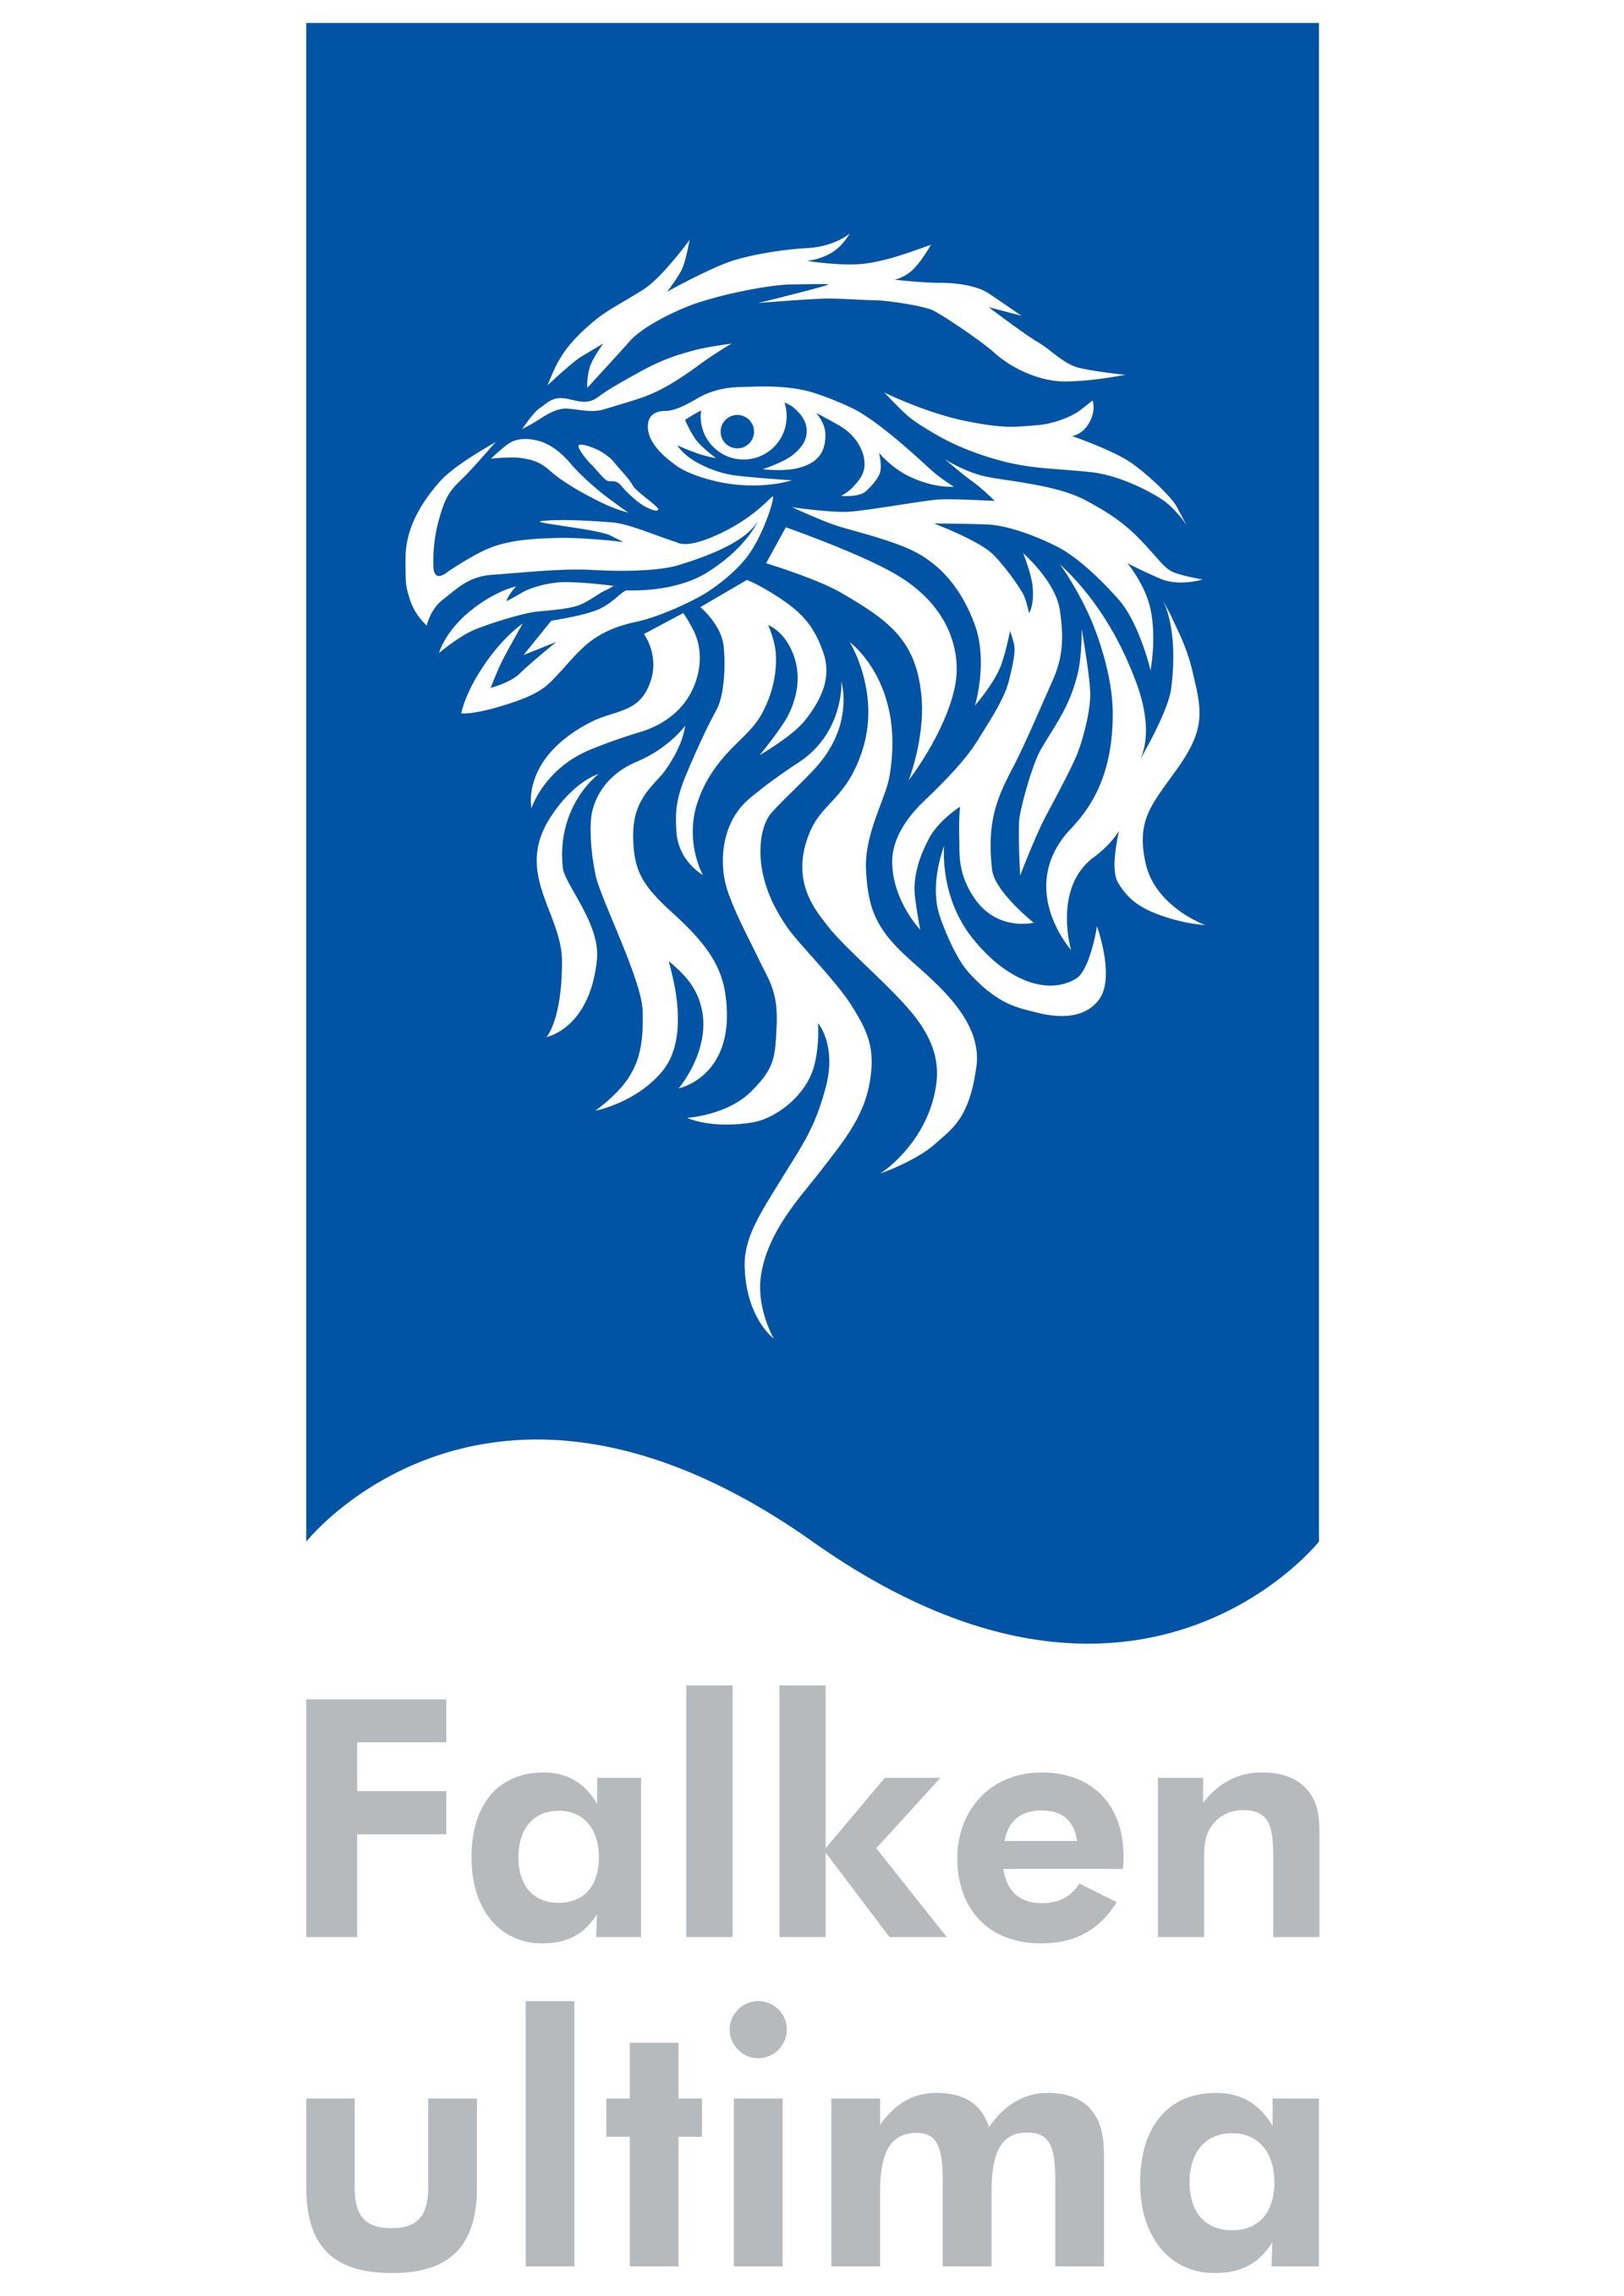 Falken ultima Logo